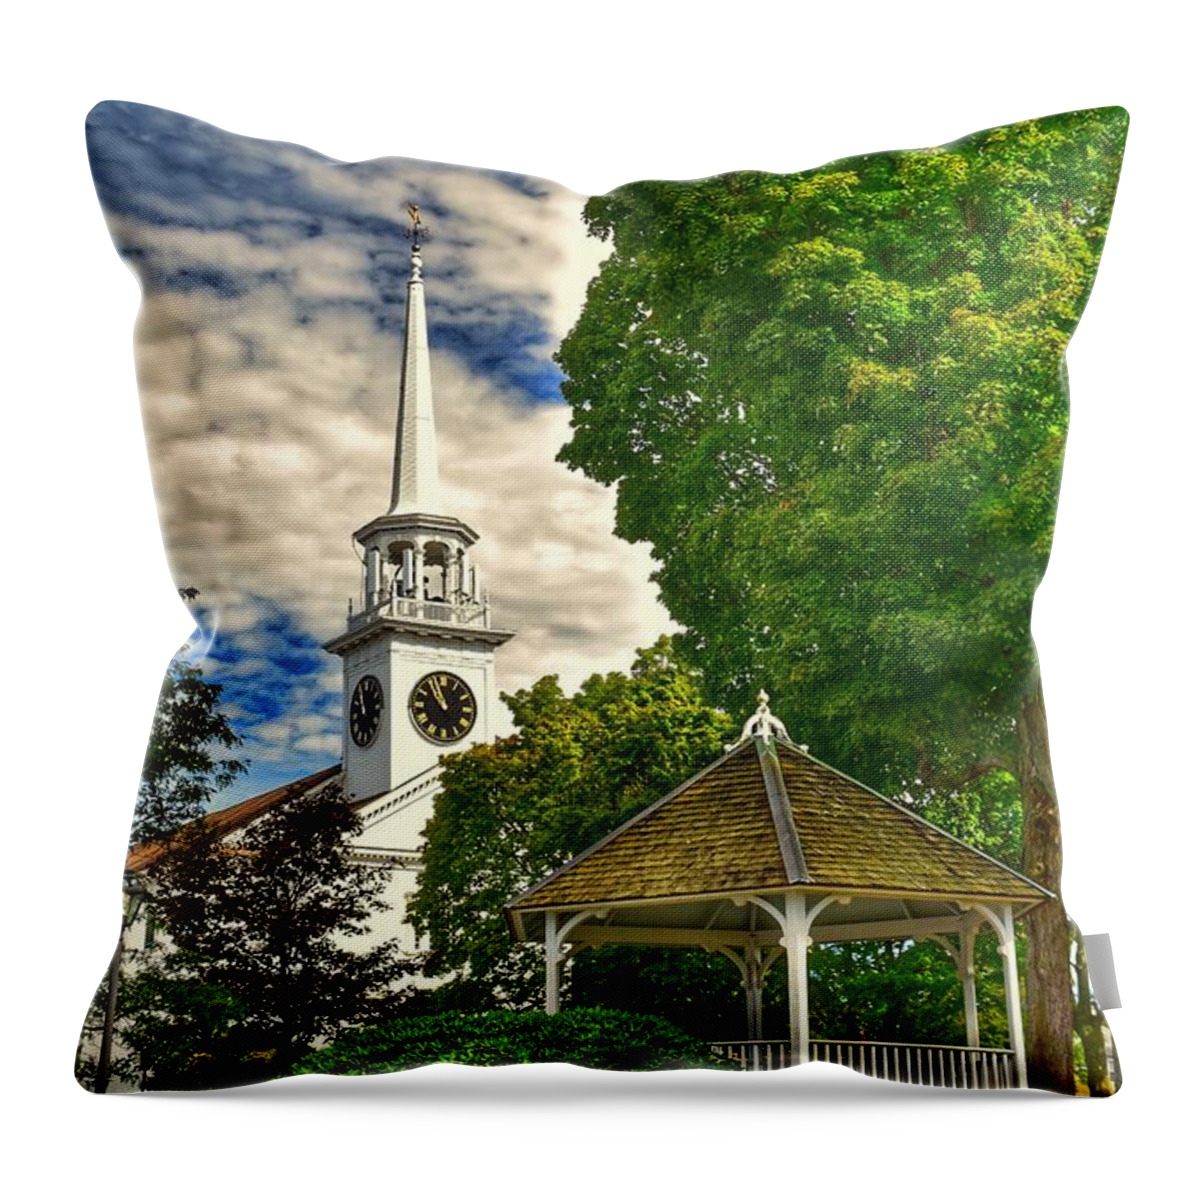 Landscape Throw Pillow featuring the photograph Town Center of Shrewsbury, Massachusetts by Monika Salvan